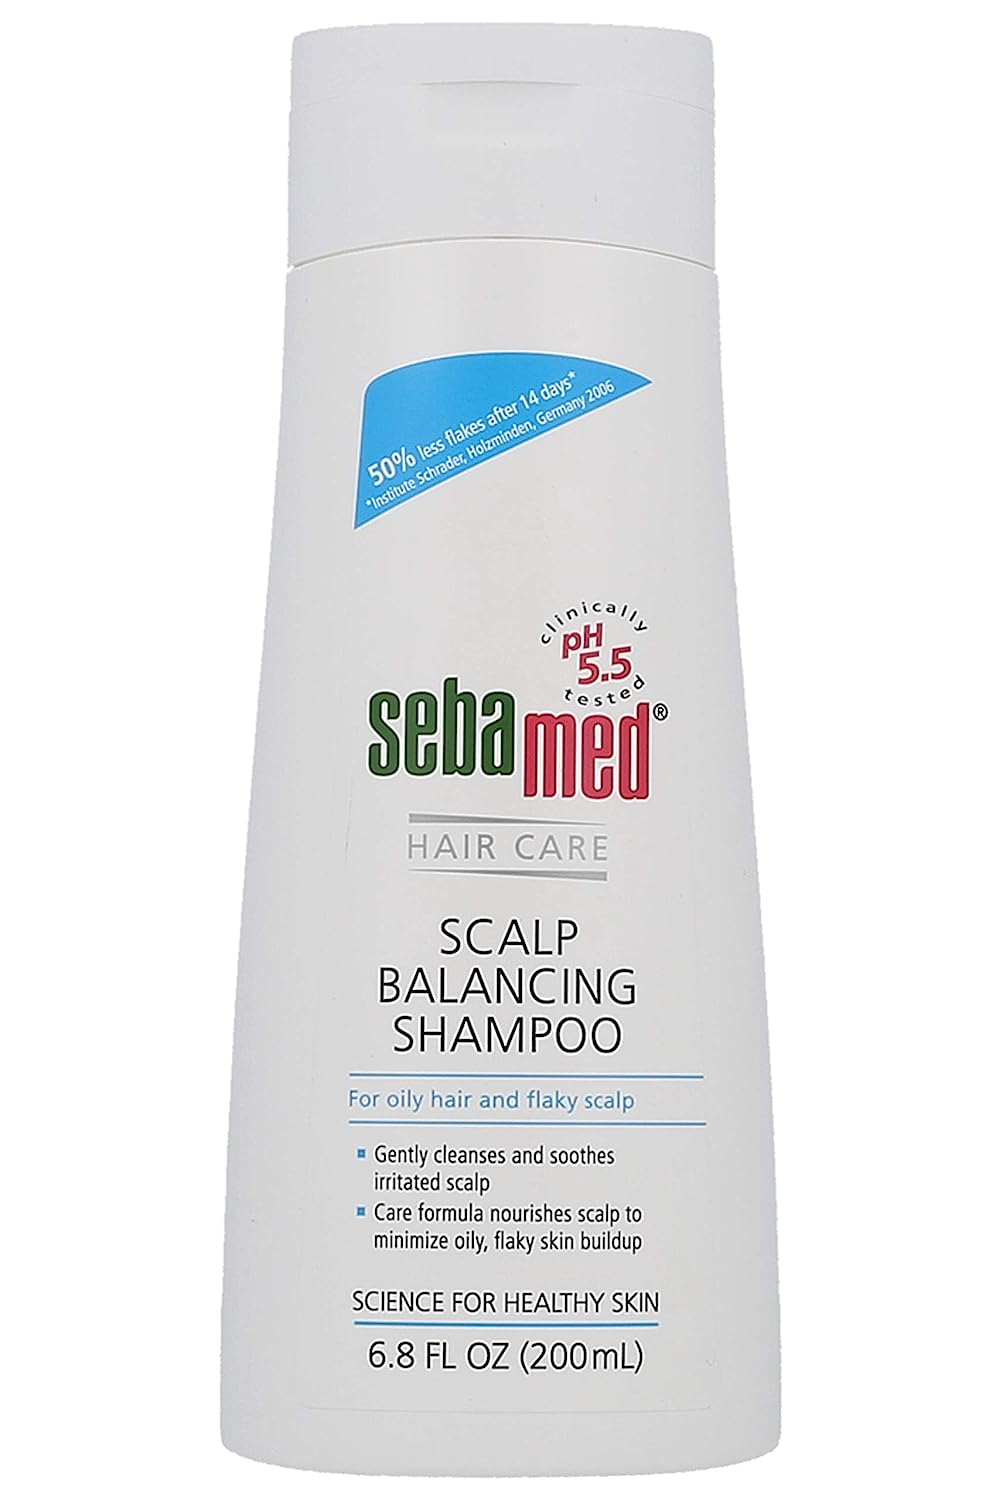 Sebamed Scalp Balancing Shampoo - Gentle Hair Care for [...]